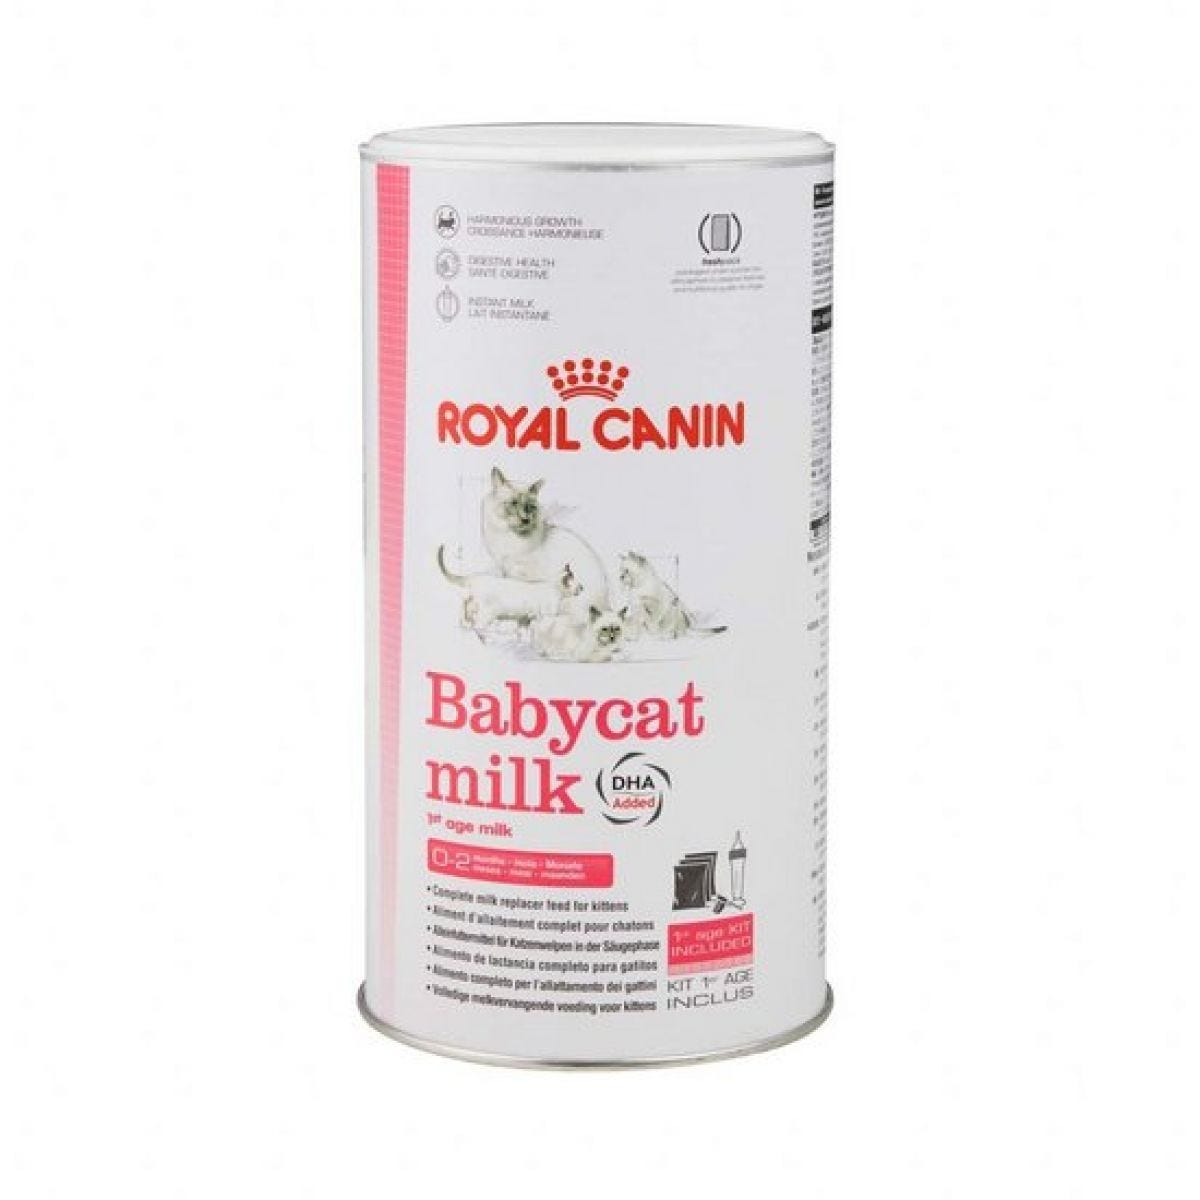 Royal Canin Puppy/Kitten Food